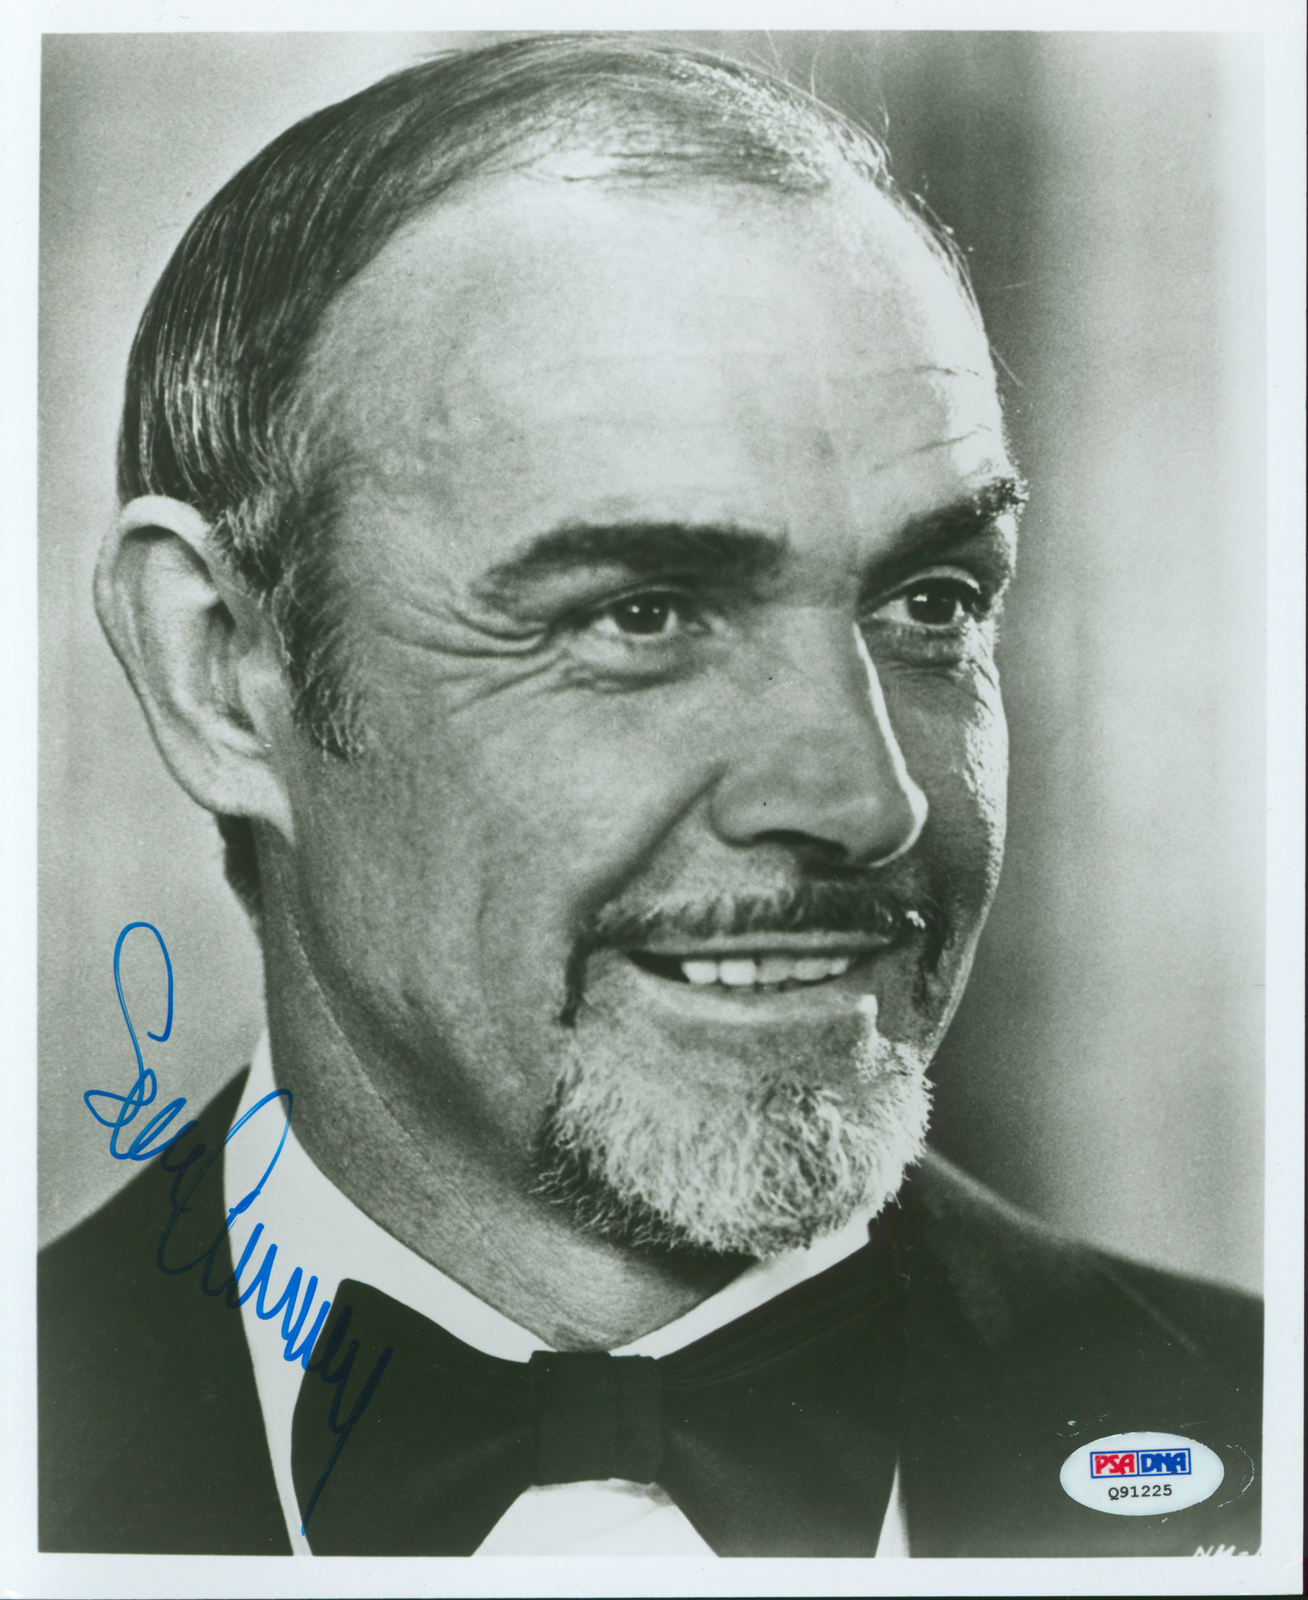 Sean Connery James Bond 007 Authentic Signed 8x10 Photo Poster painting Autographed PSA #Q91225